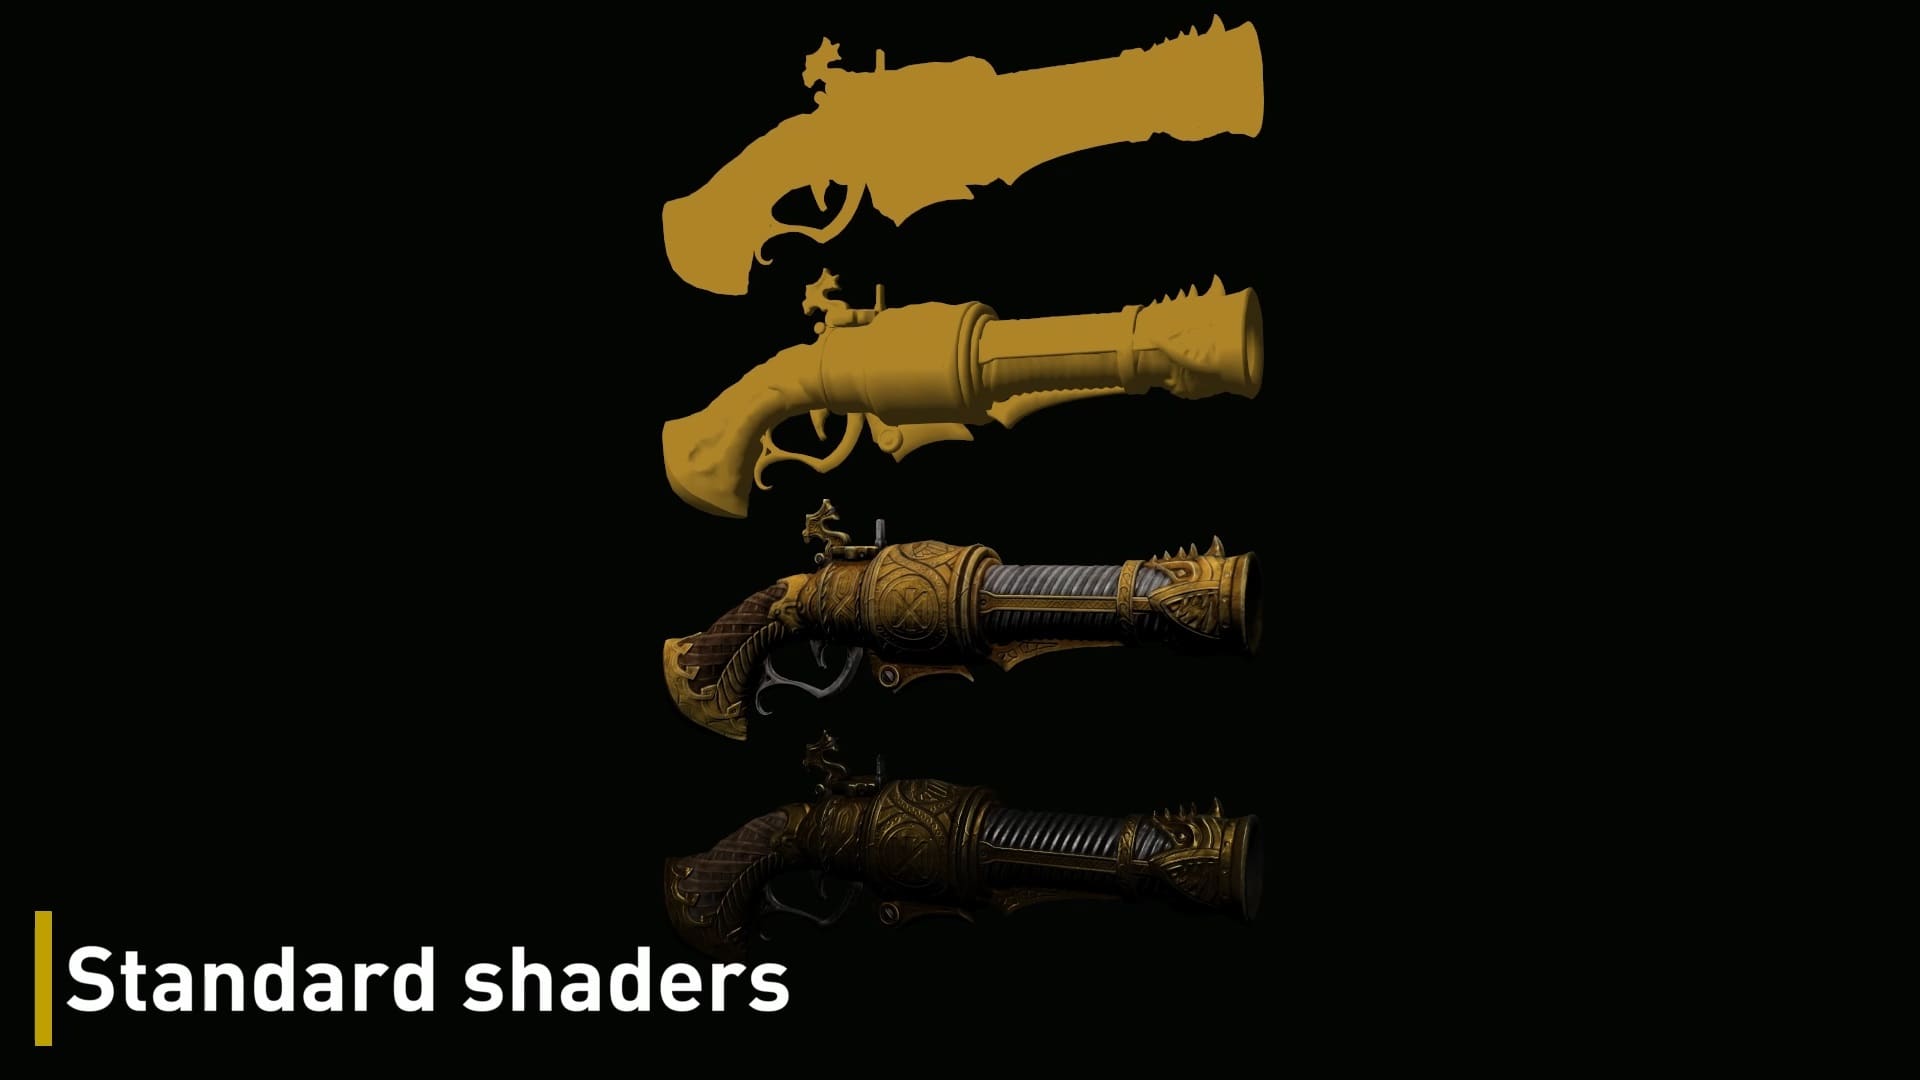 Standard shaders